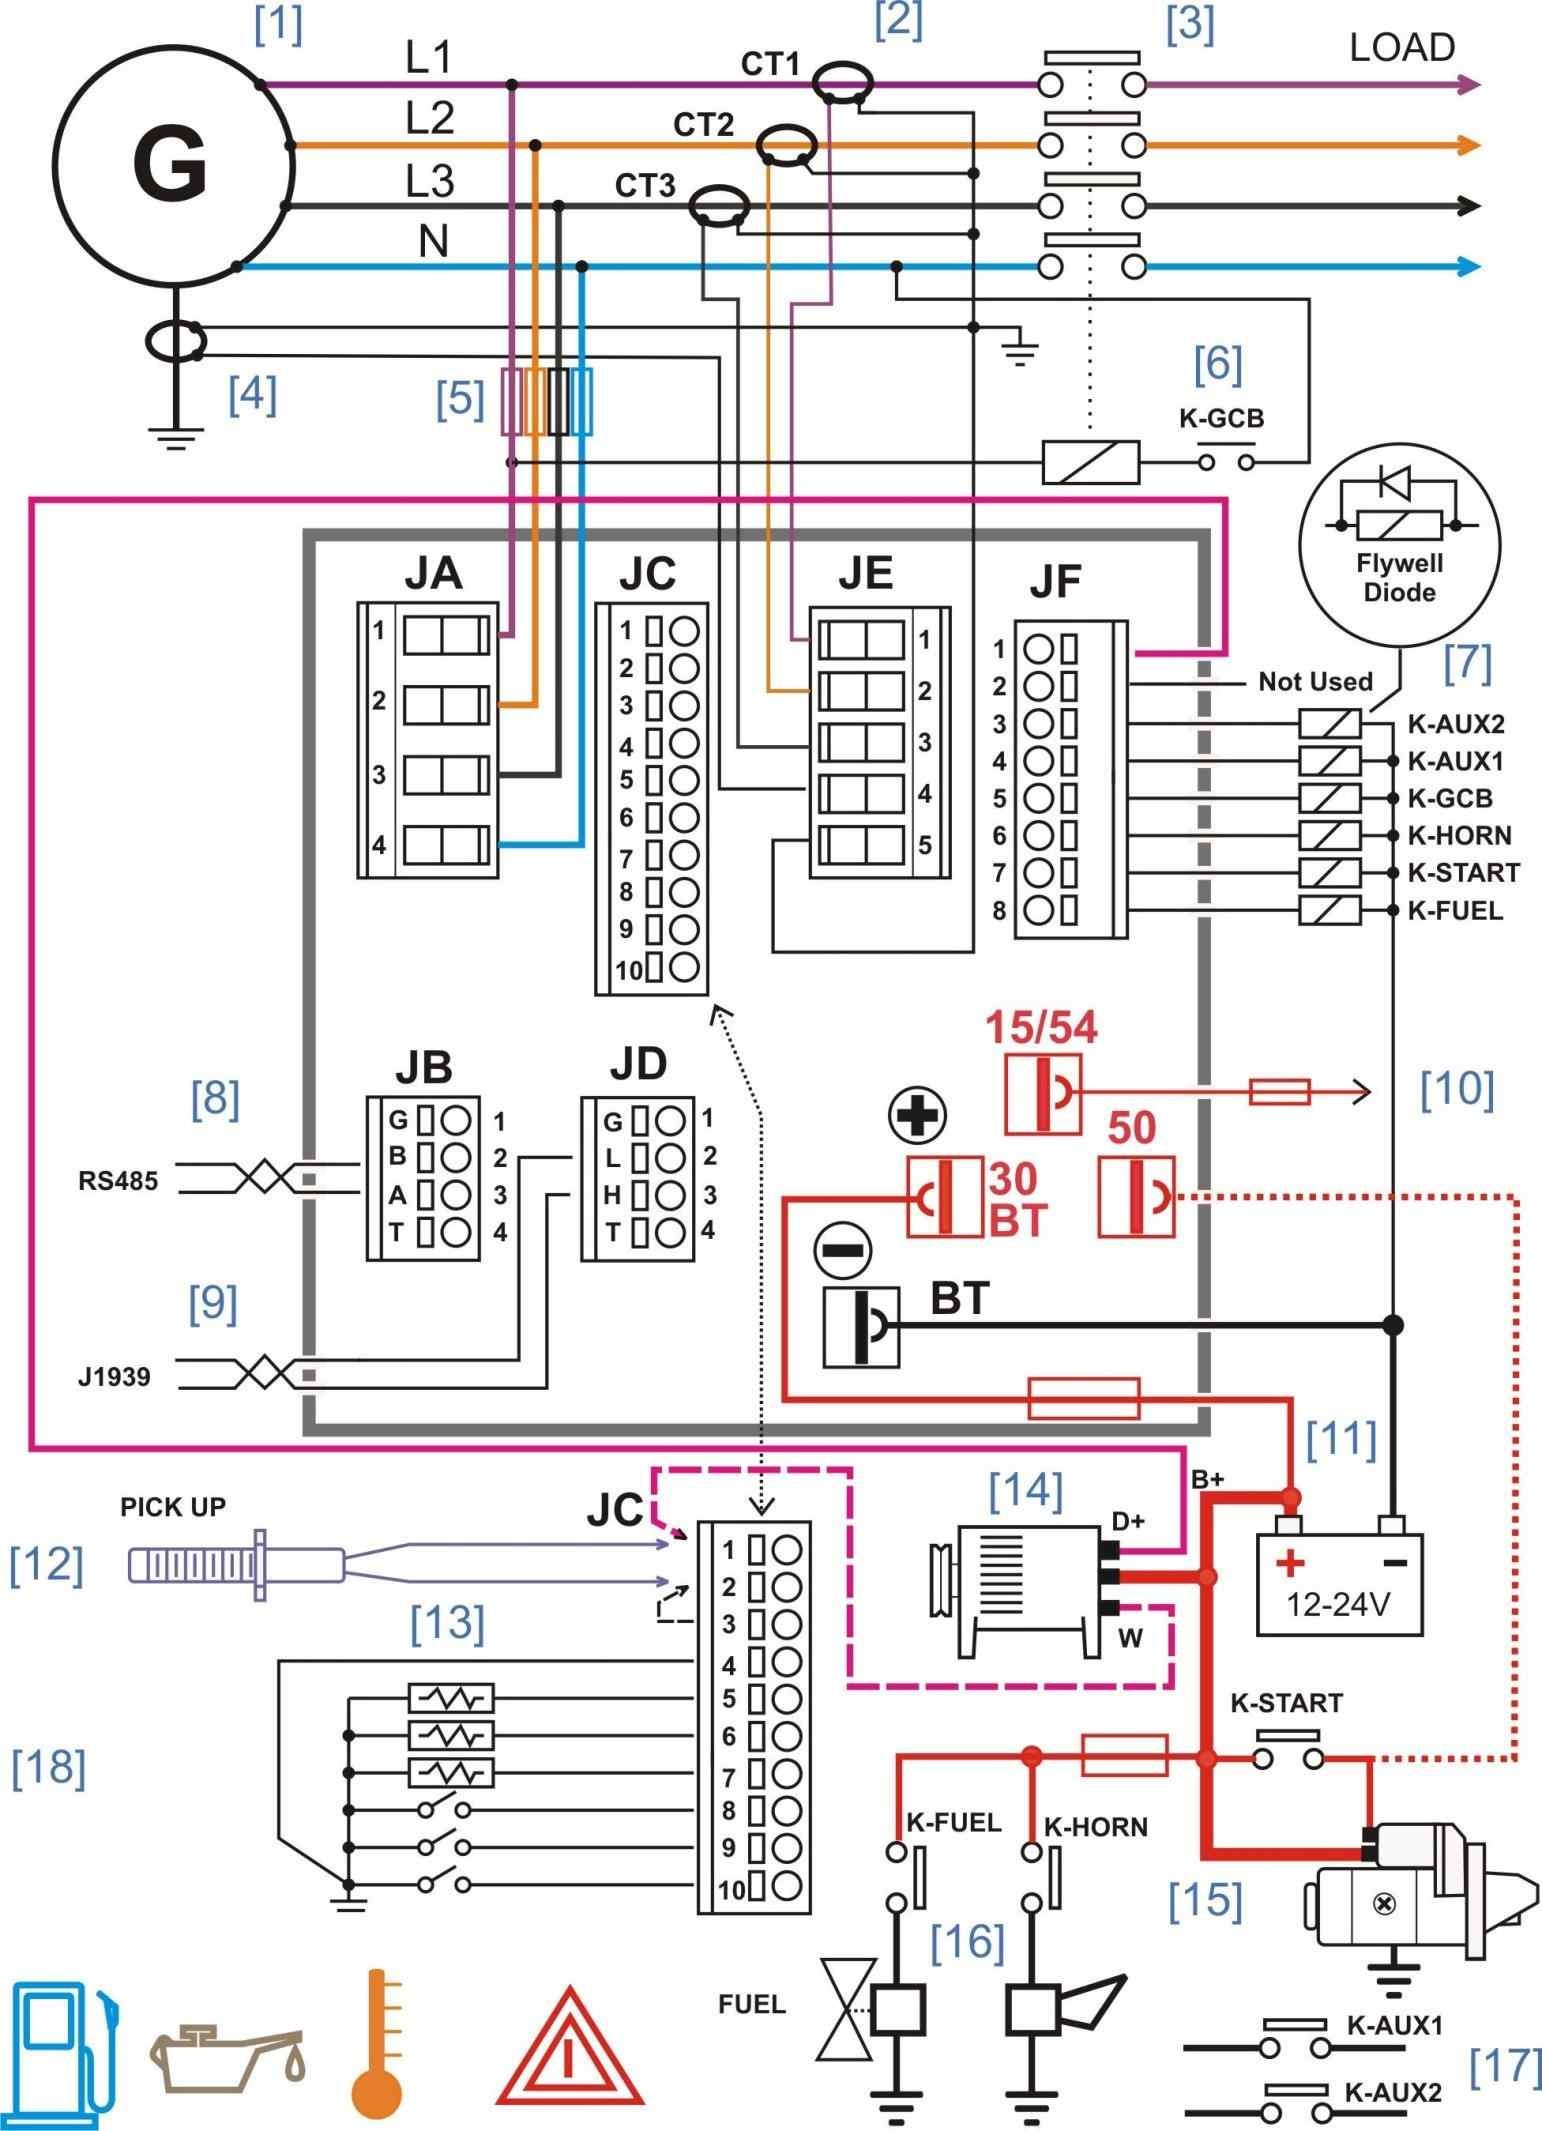 100 Amp Panel Wiring Diagram from mainetreasurechest.com